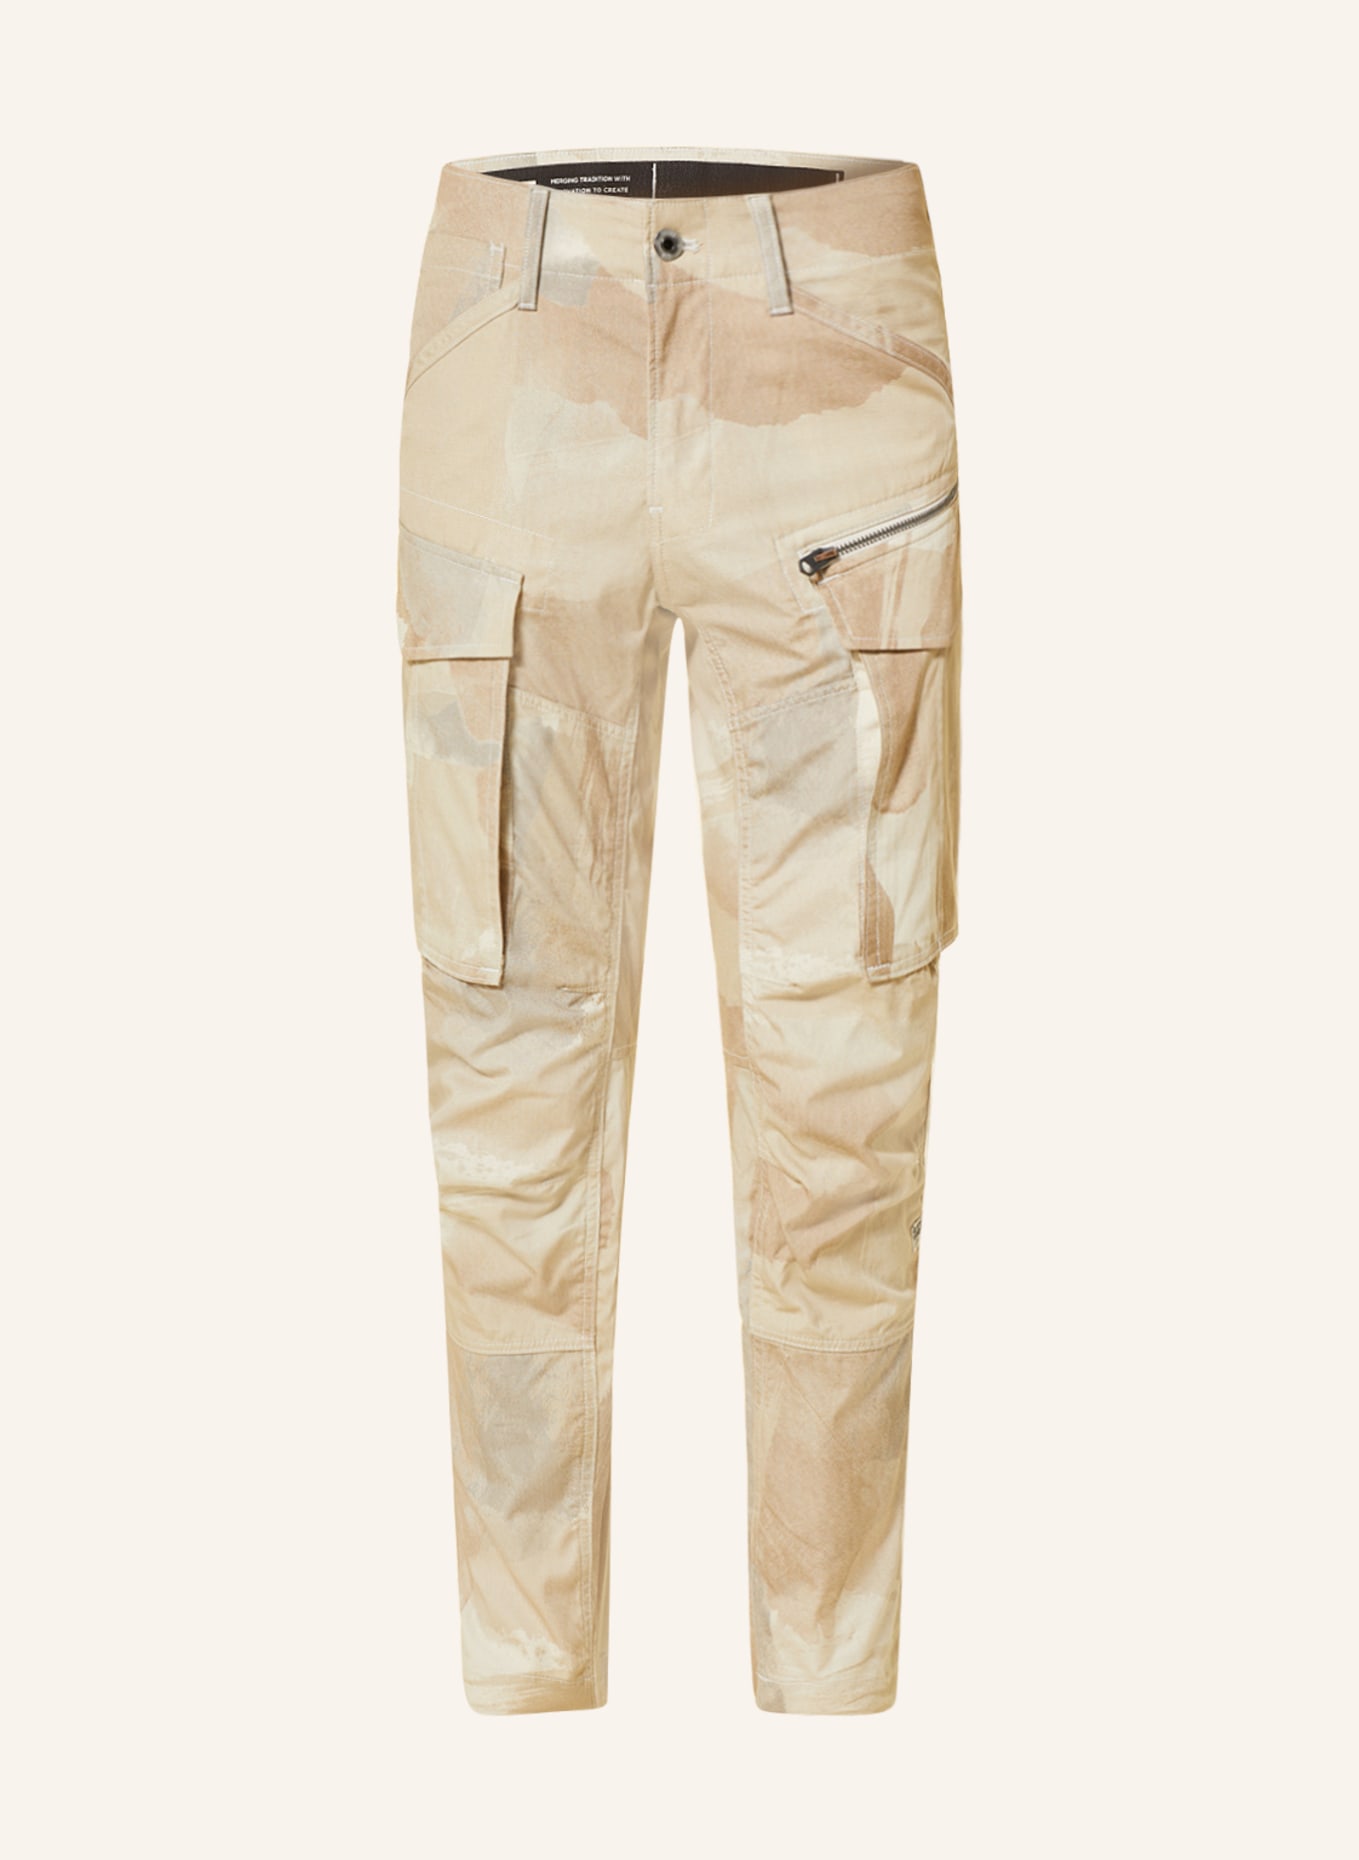 G-Star RAW Cargo pants in beige/ ecru tapered fit